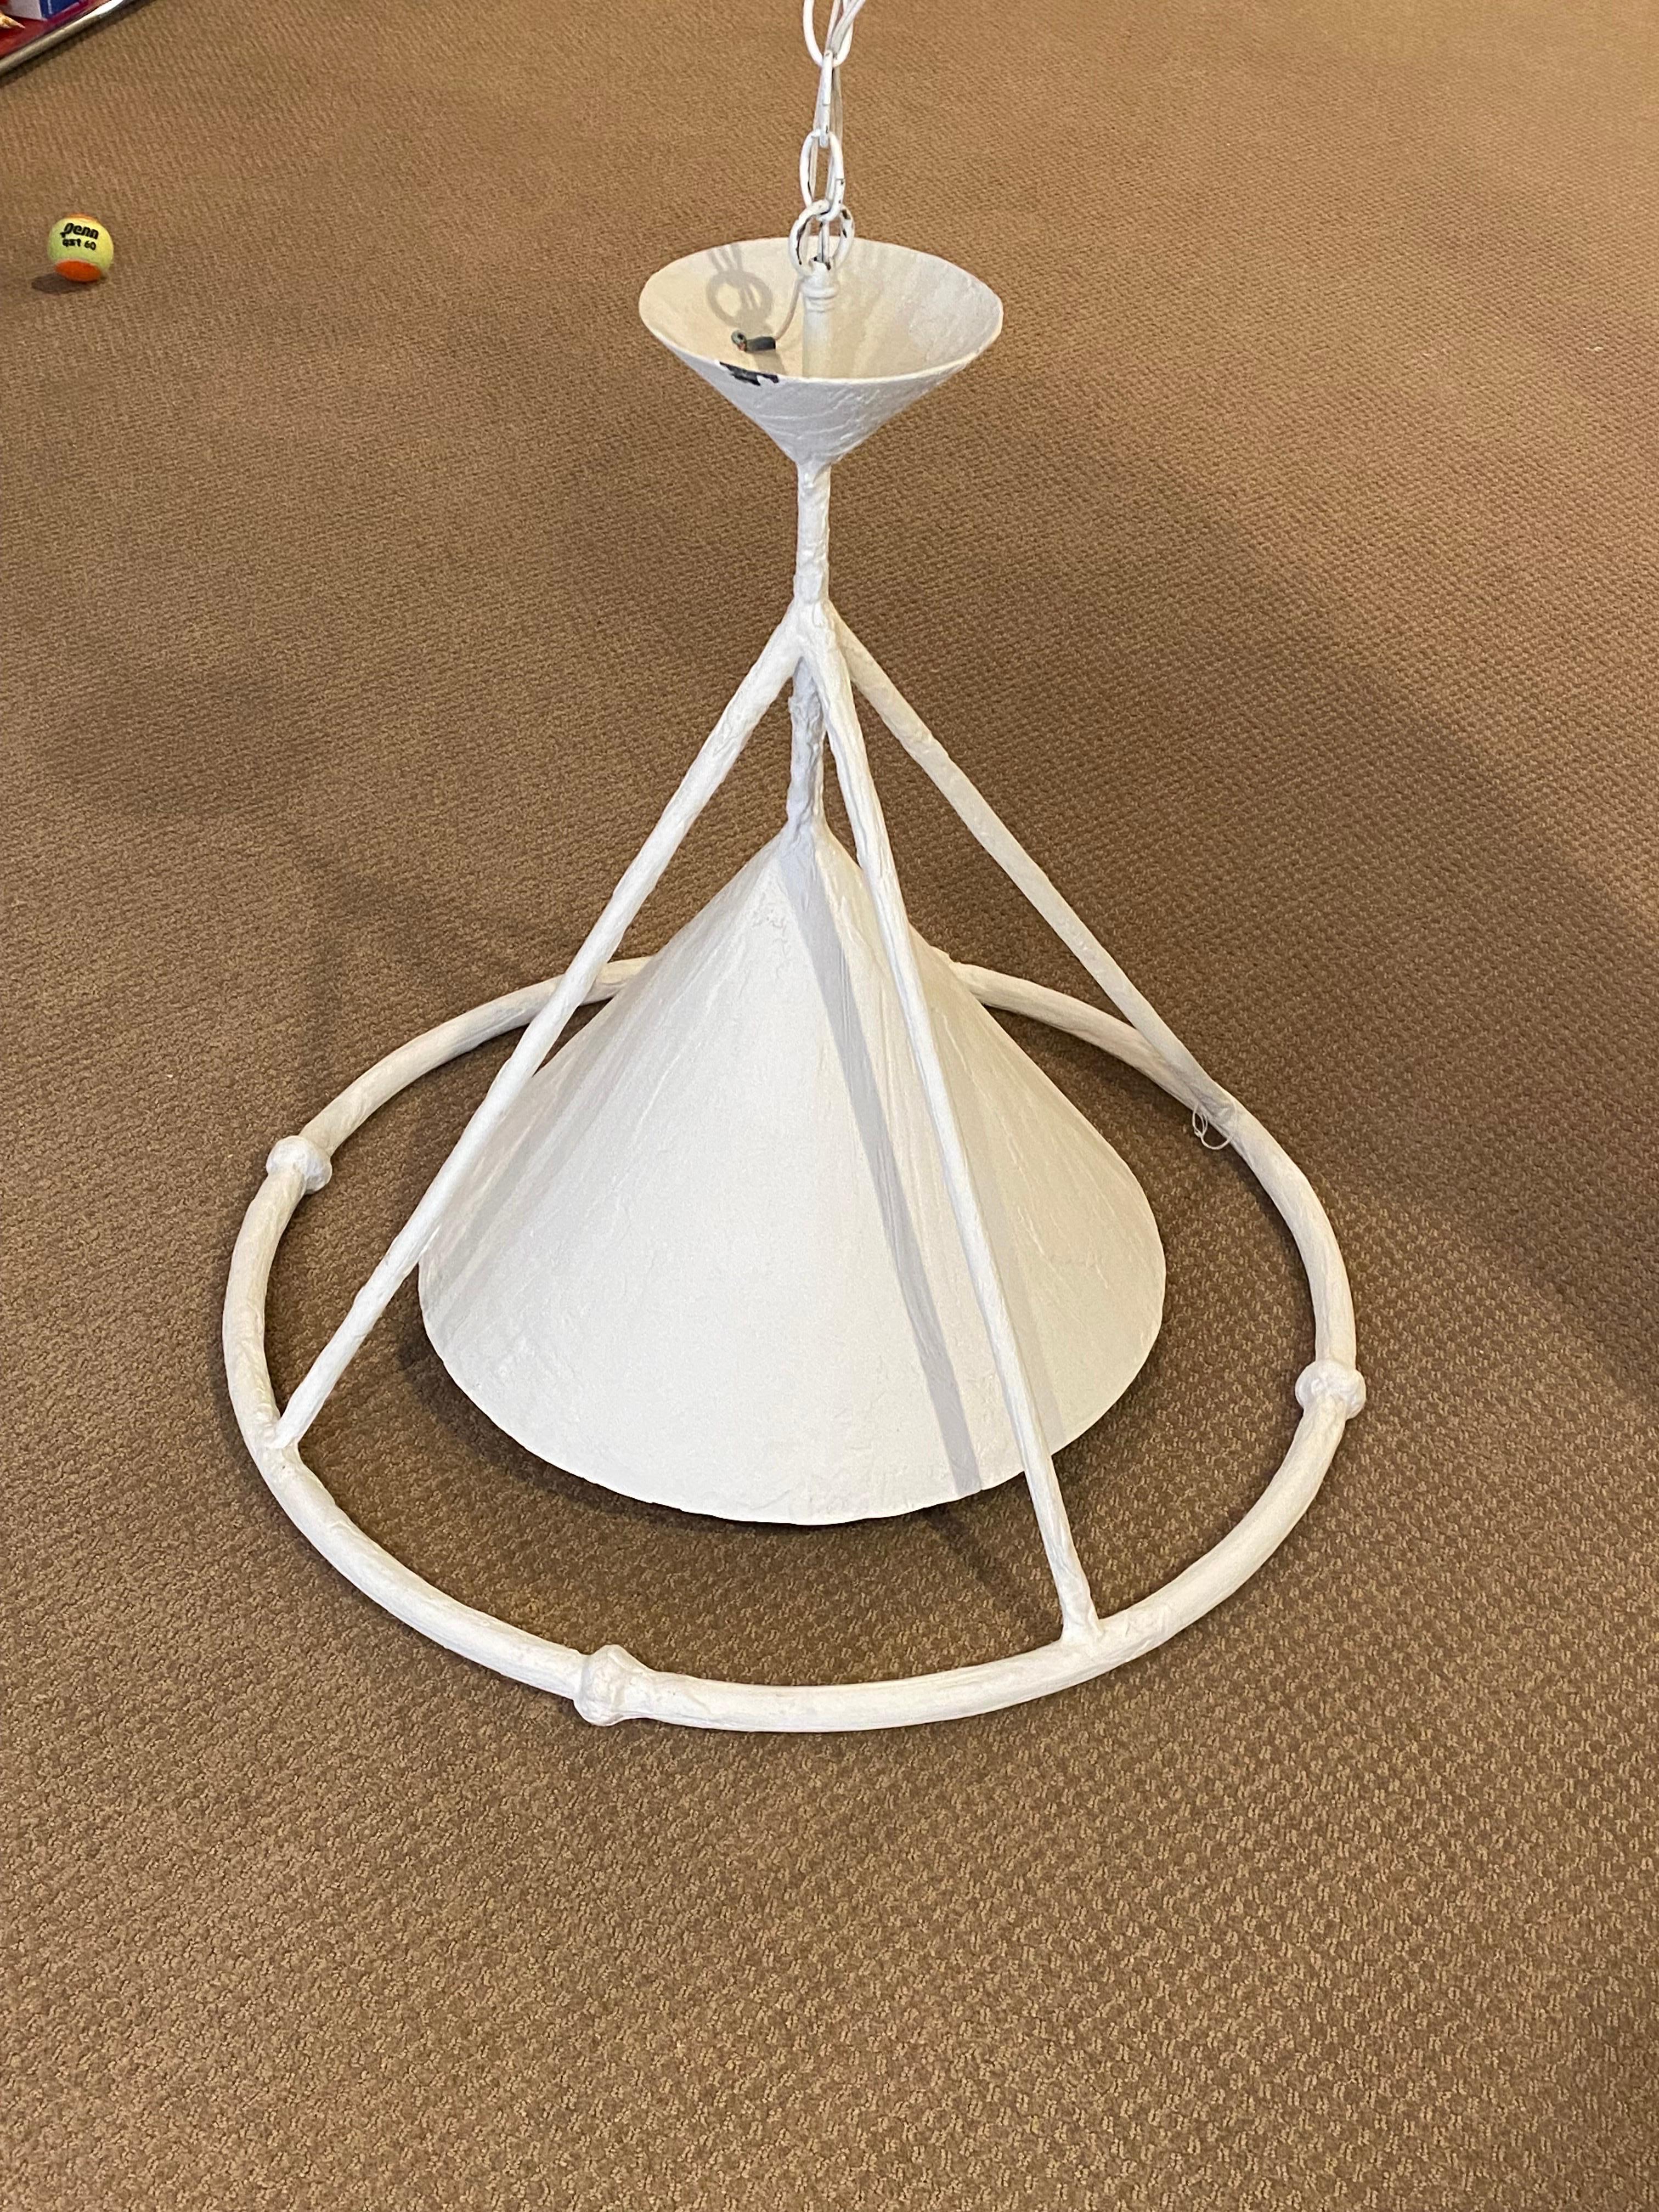 American White Plaster Custom Hanging Lighting Fixture by Paul Ferrante  For Sale